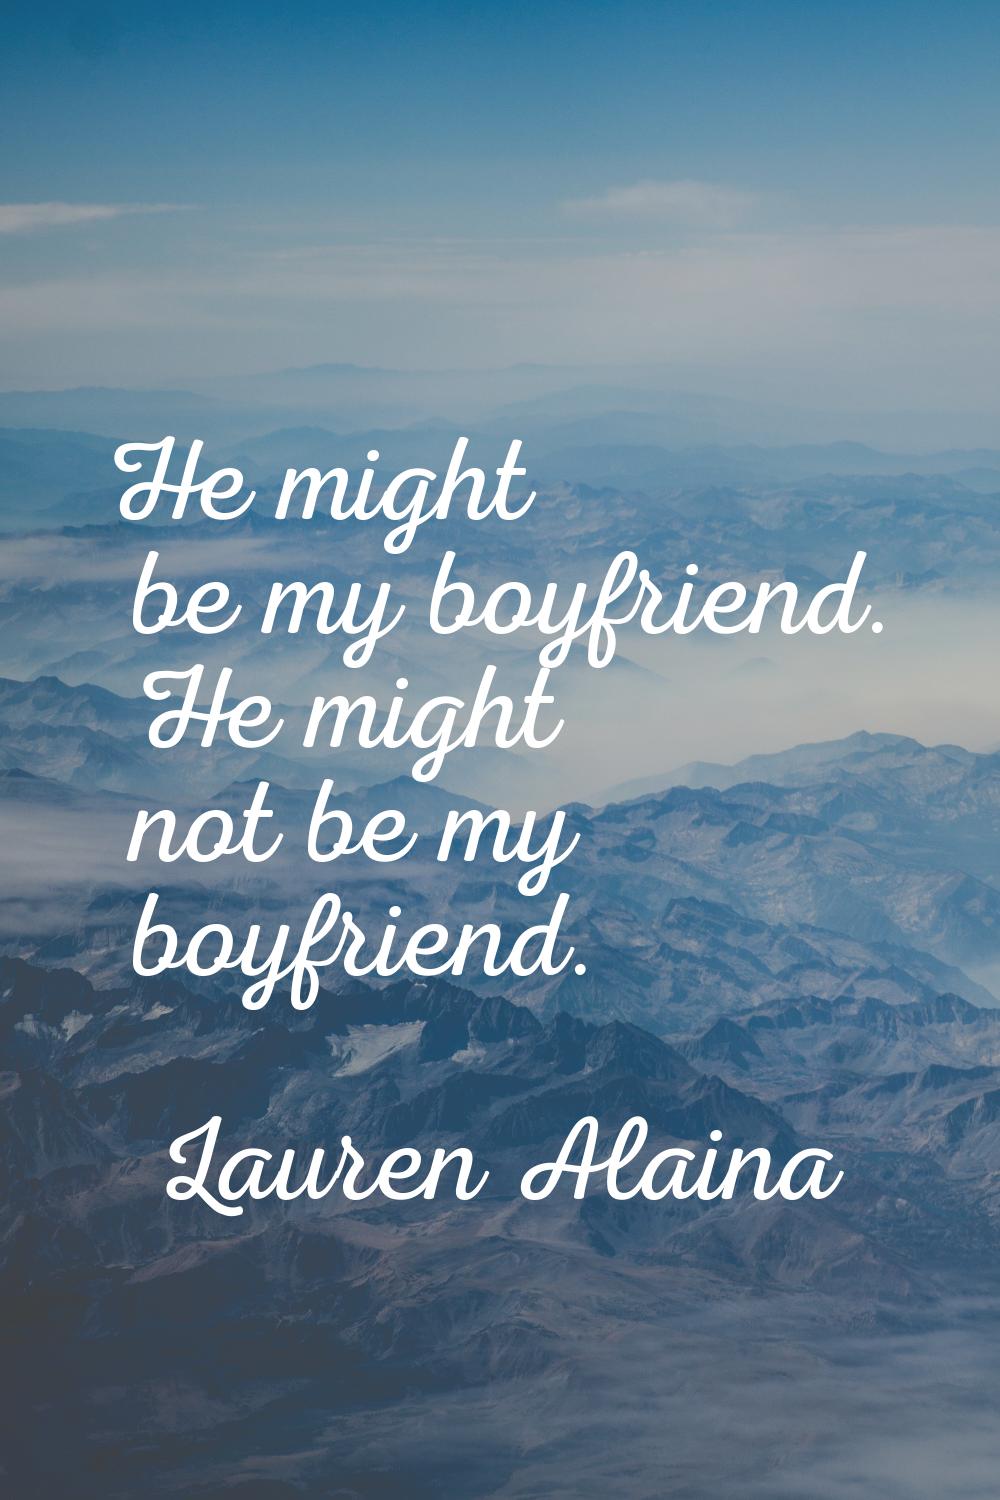 He might be my boyfriend. He might not be my boyfriend.